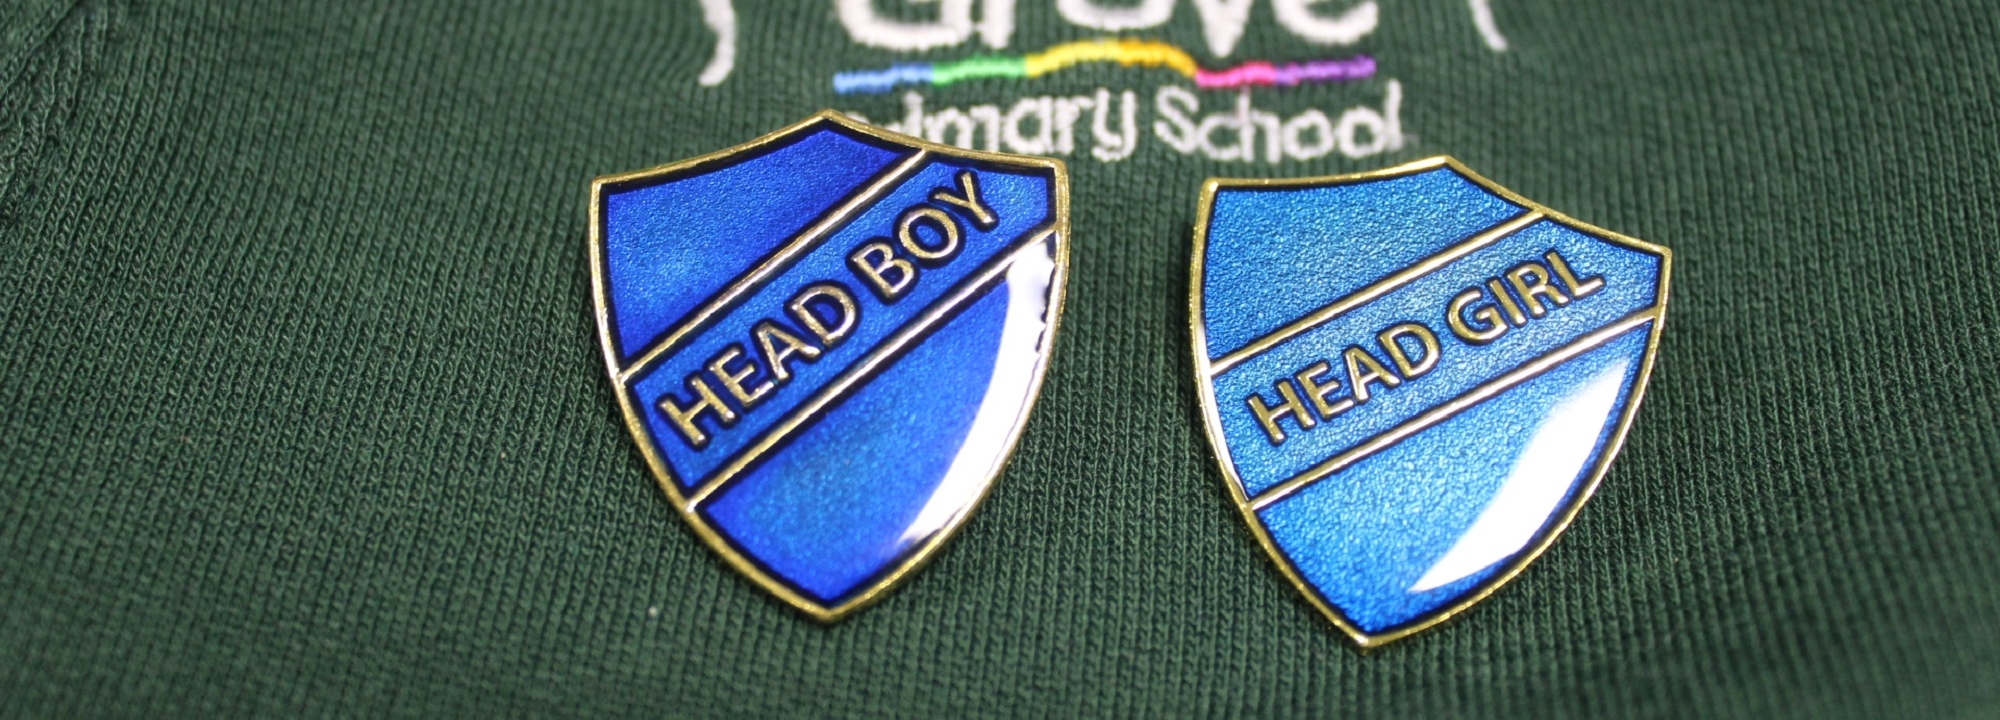 Head Girl and Boy Badges